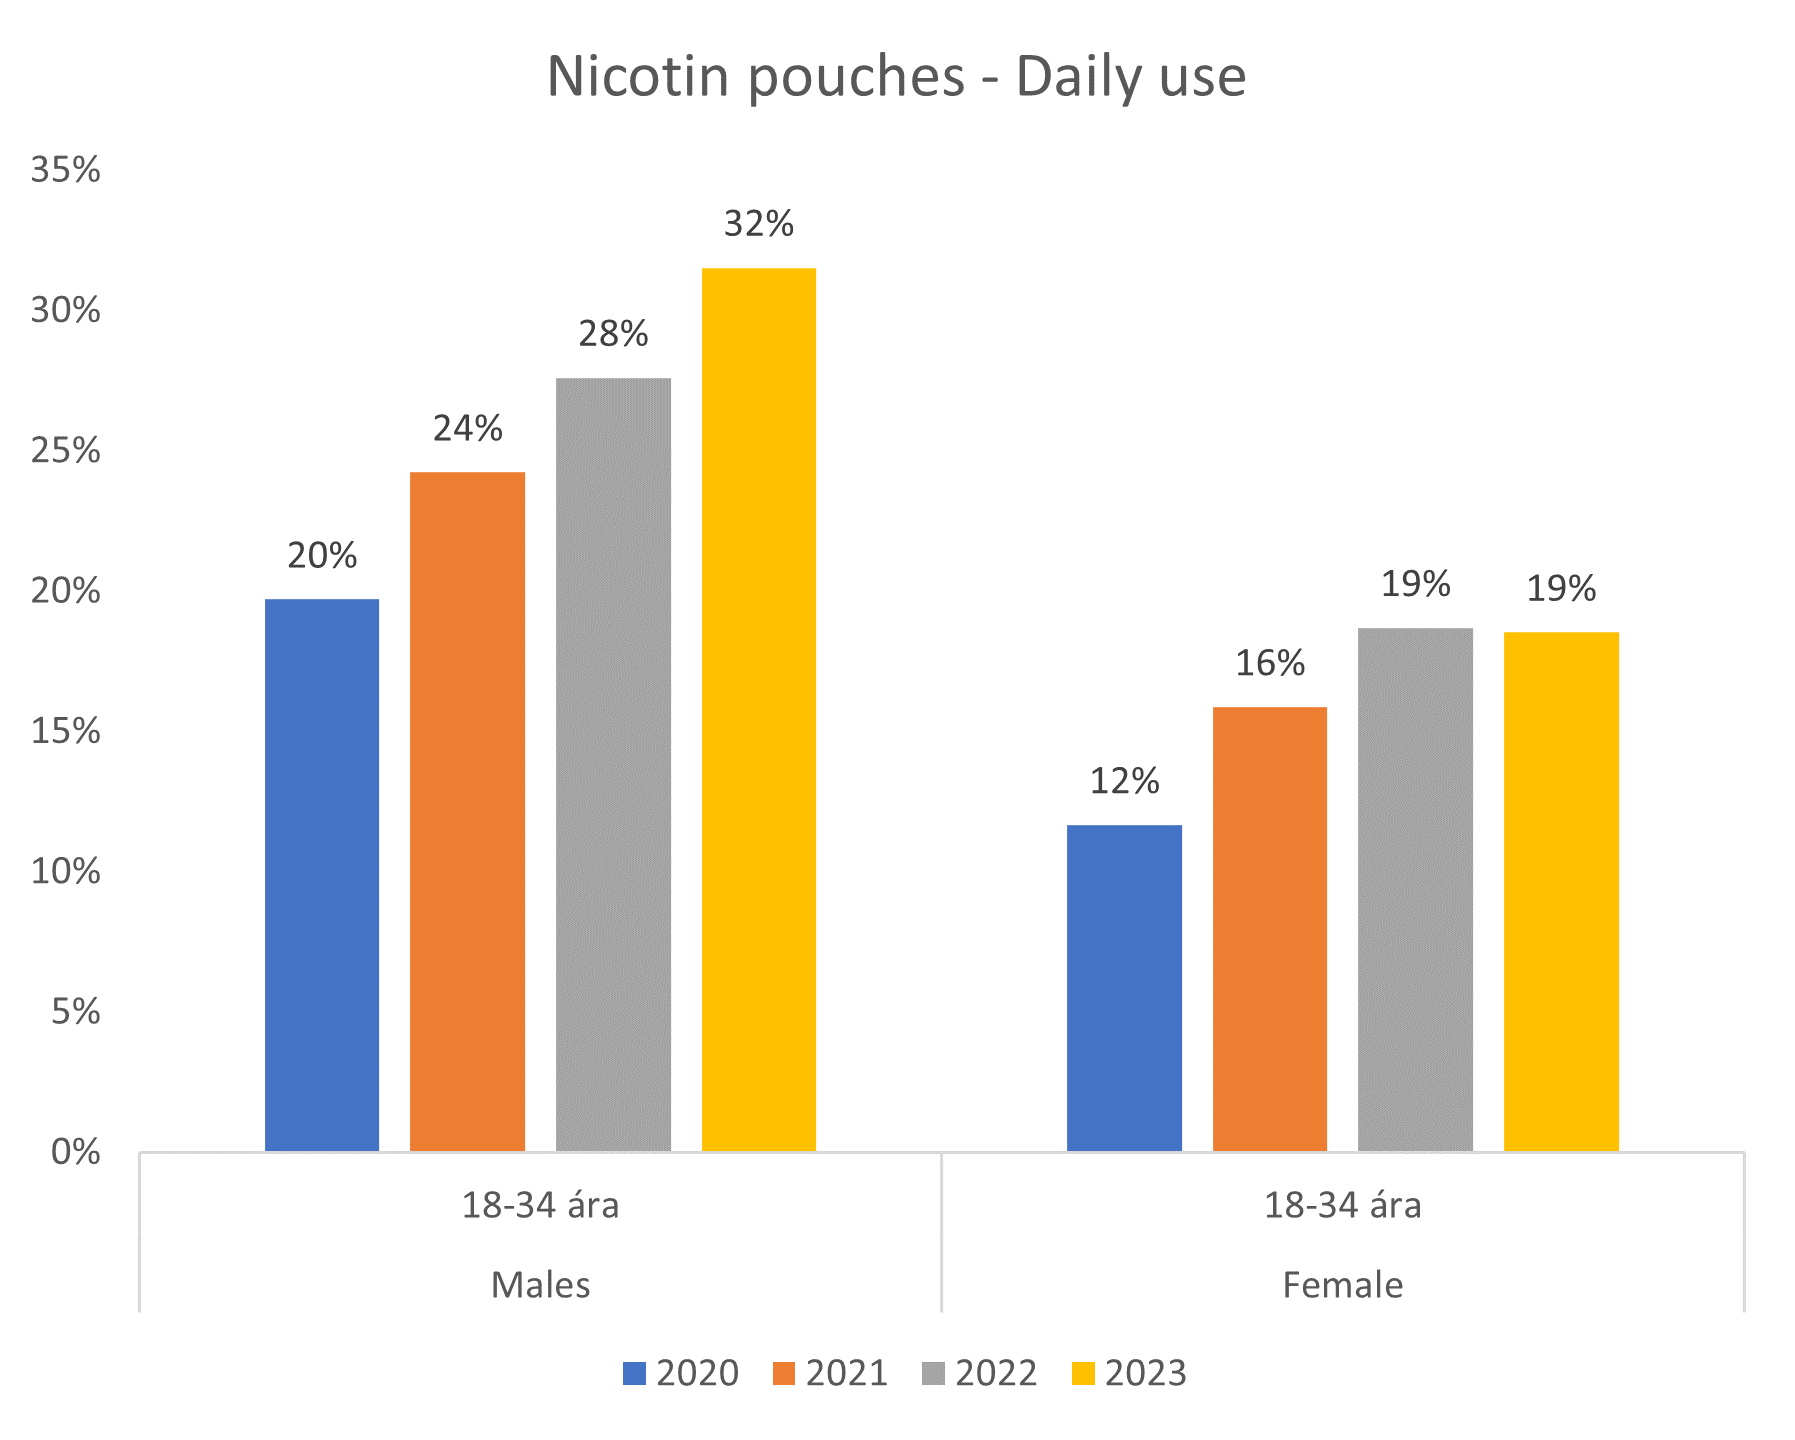 Mynd með frétt. Nicotin pouches. Daily use 2020-2023